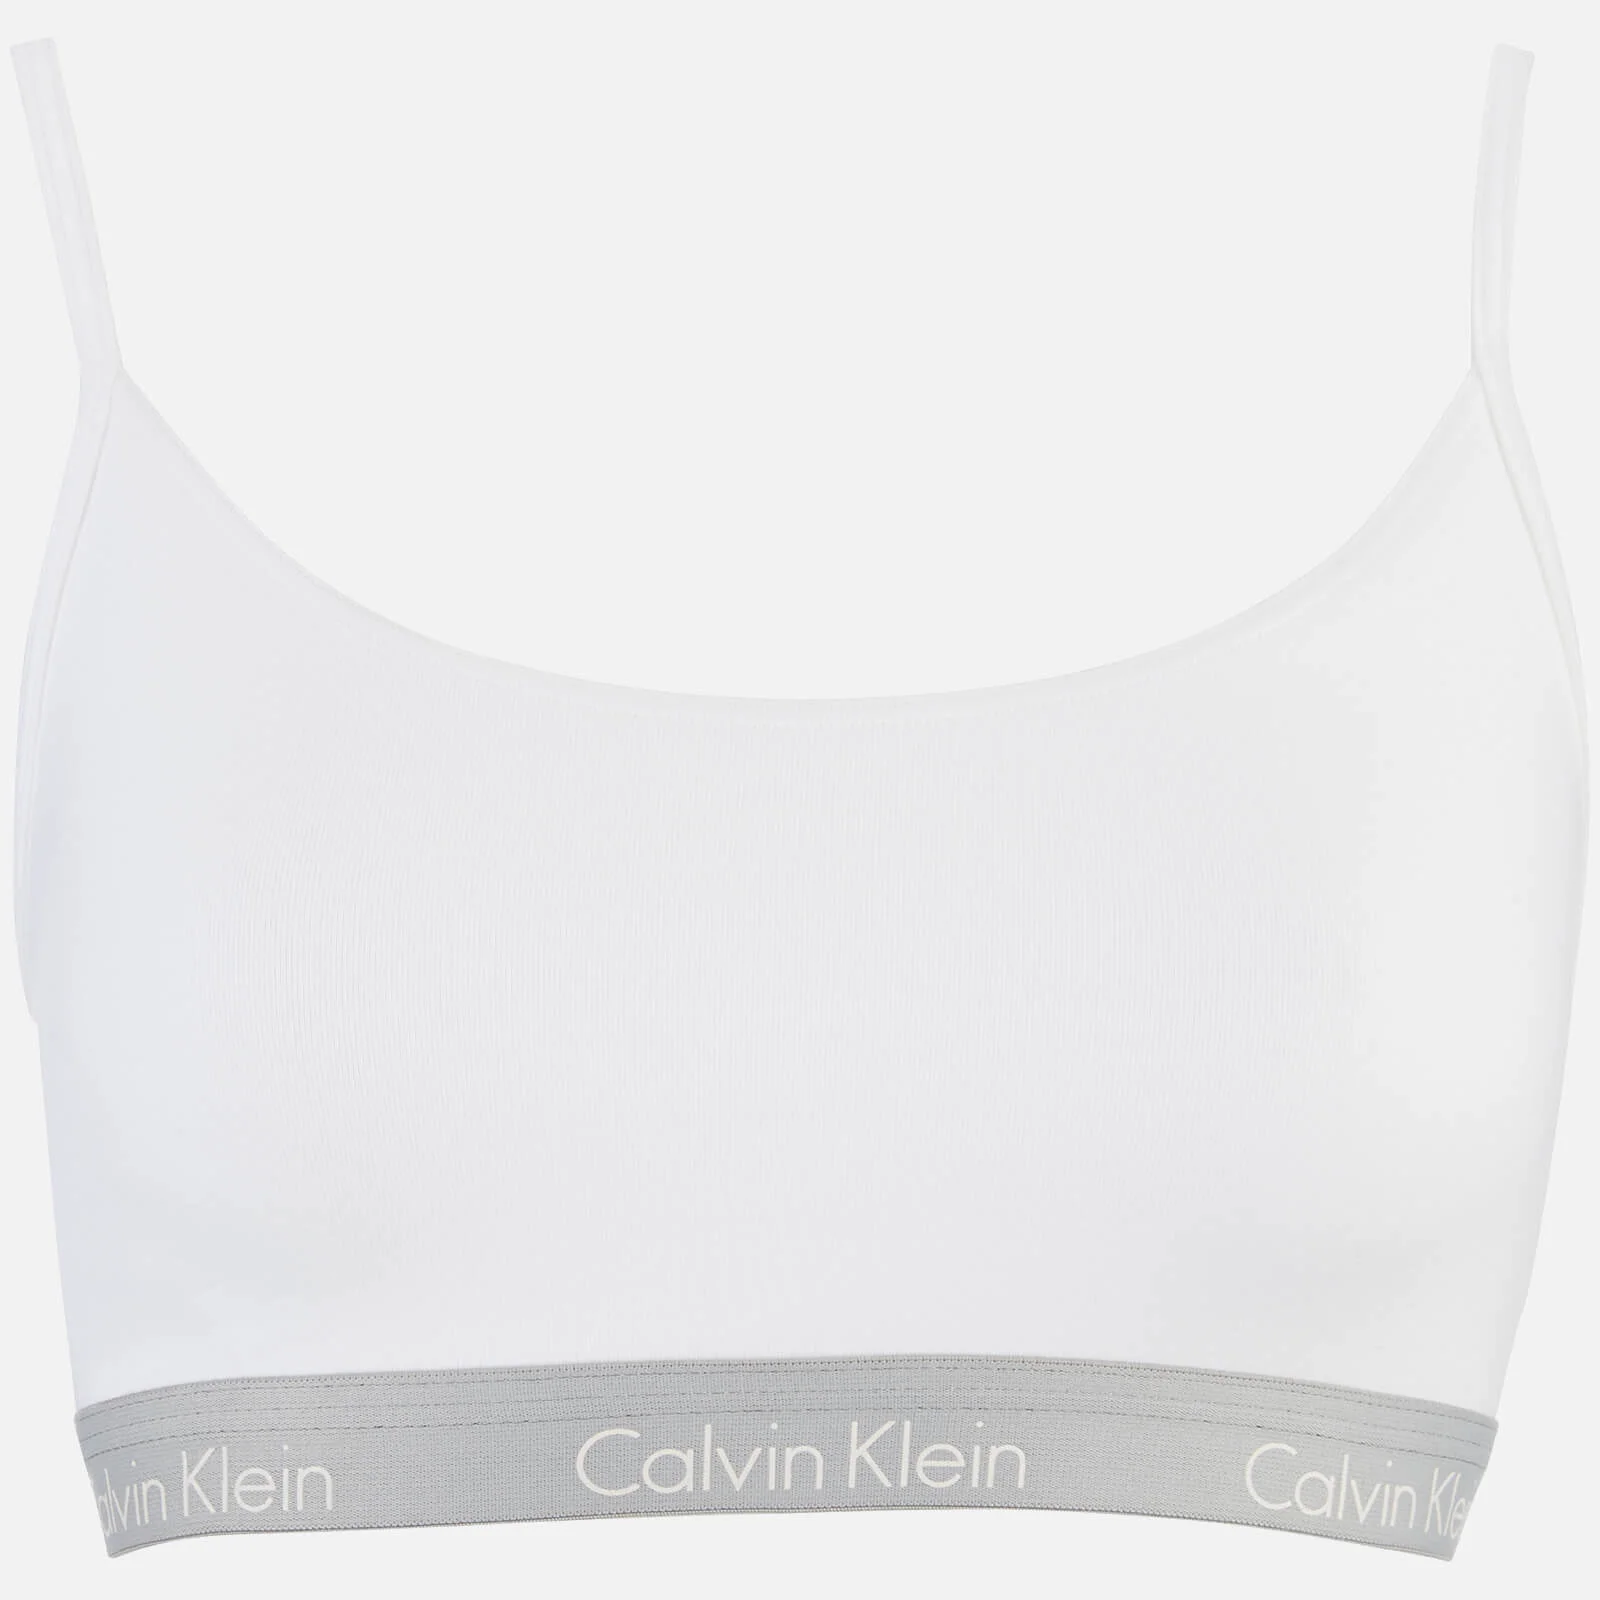 Calvin Klein Women's CK One Bralette - White Image 1